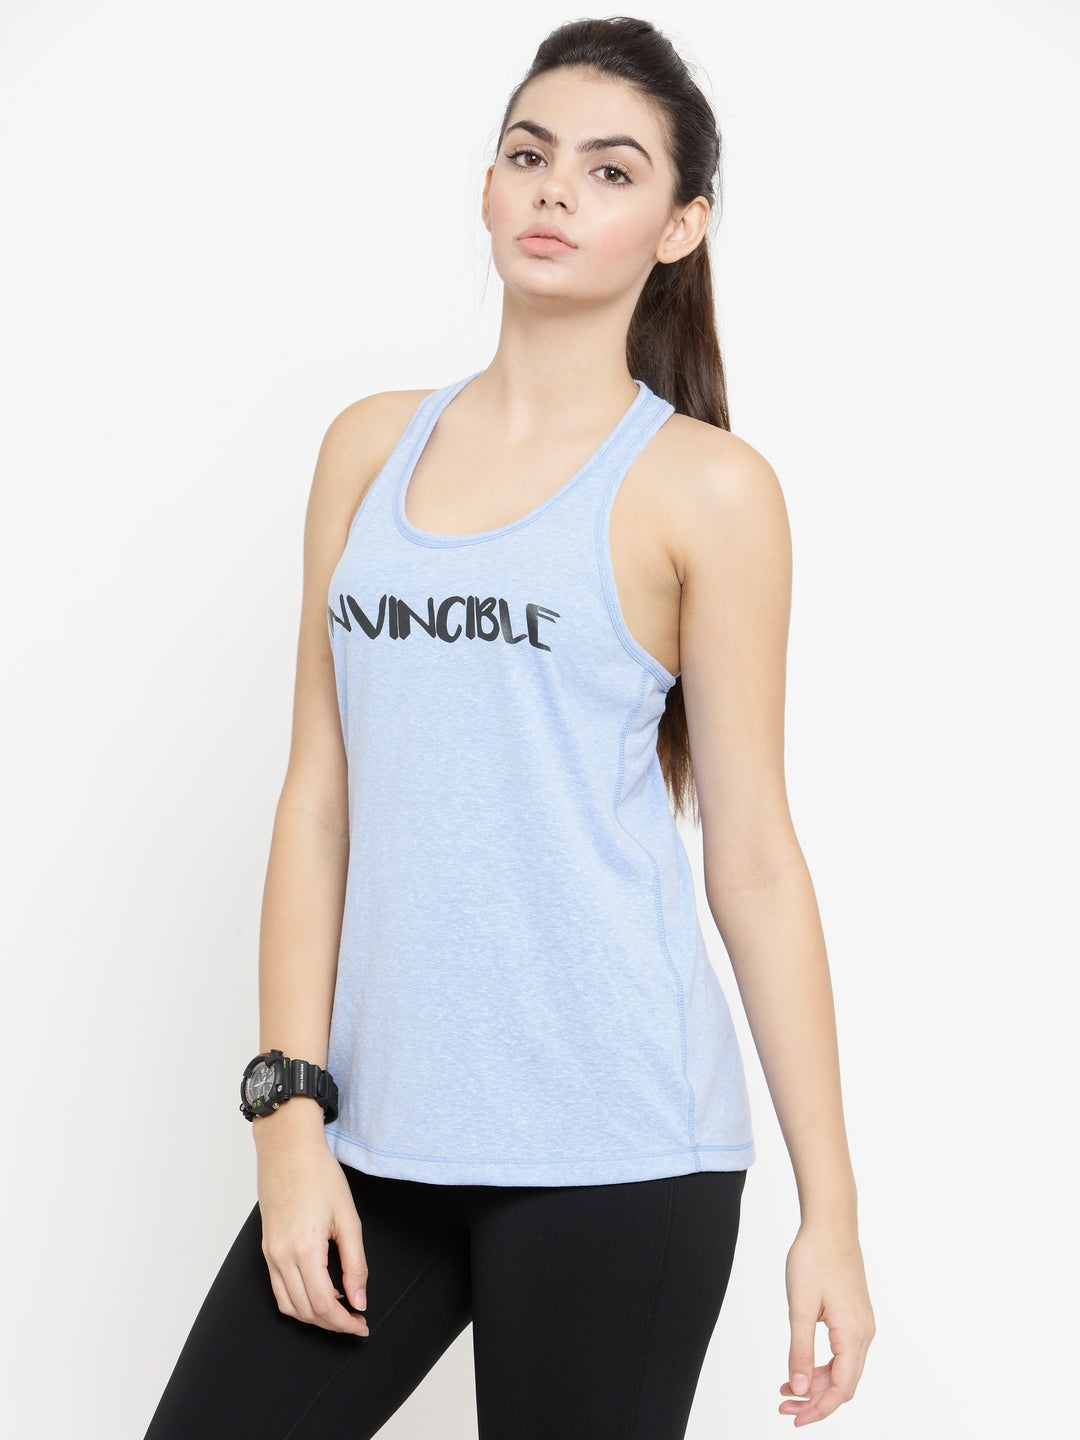 Invincible Women’s Athleisure Slogan Workout Tank Top